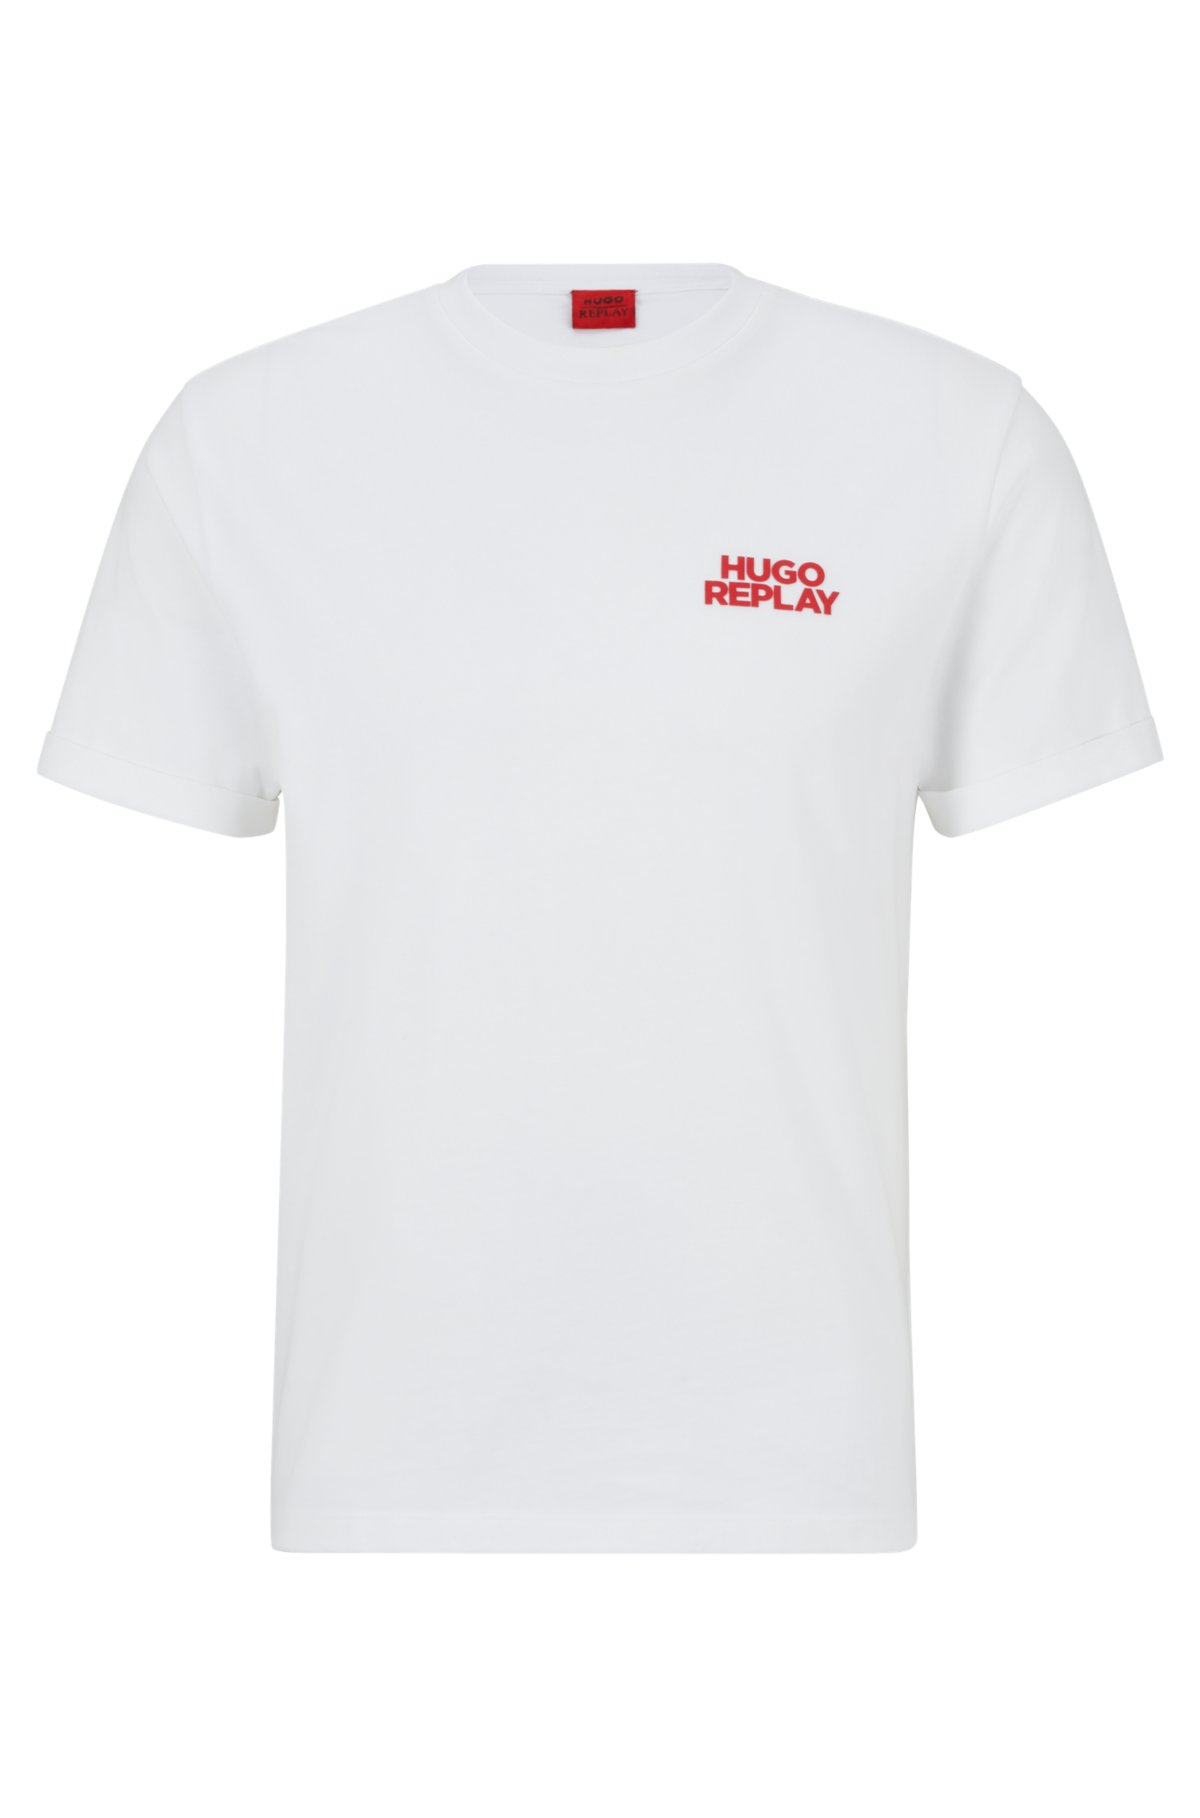 HUGO - HUGO  REPLAY cotton T-shirt with capsule logo print